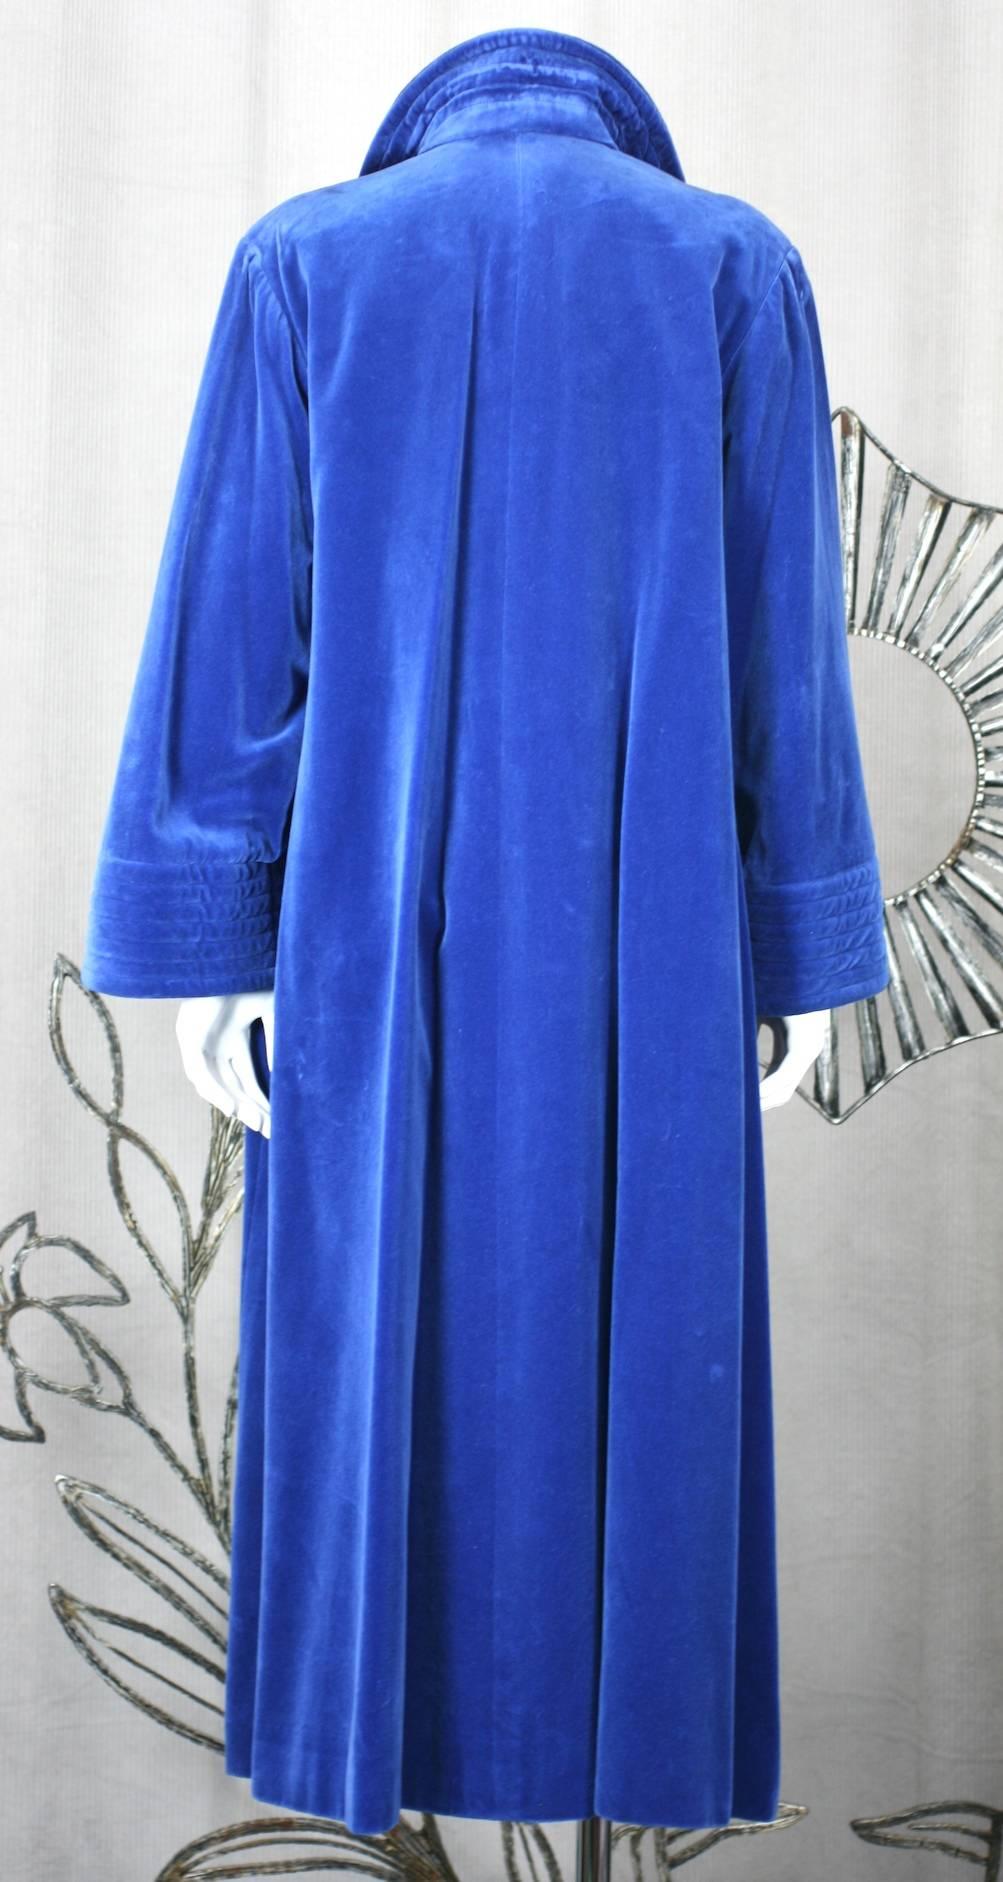 Yves Saint Laurent Rive Gauche Velvet Chinese Coat In Good Condition For Sale In New York, NY